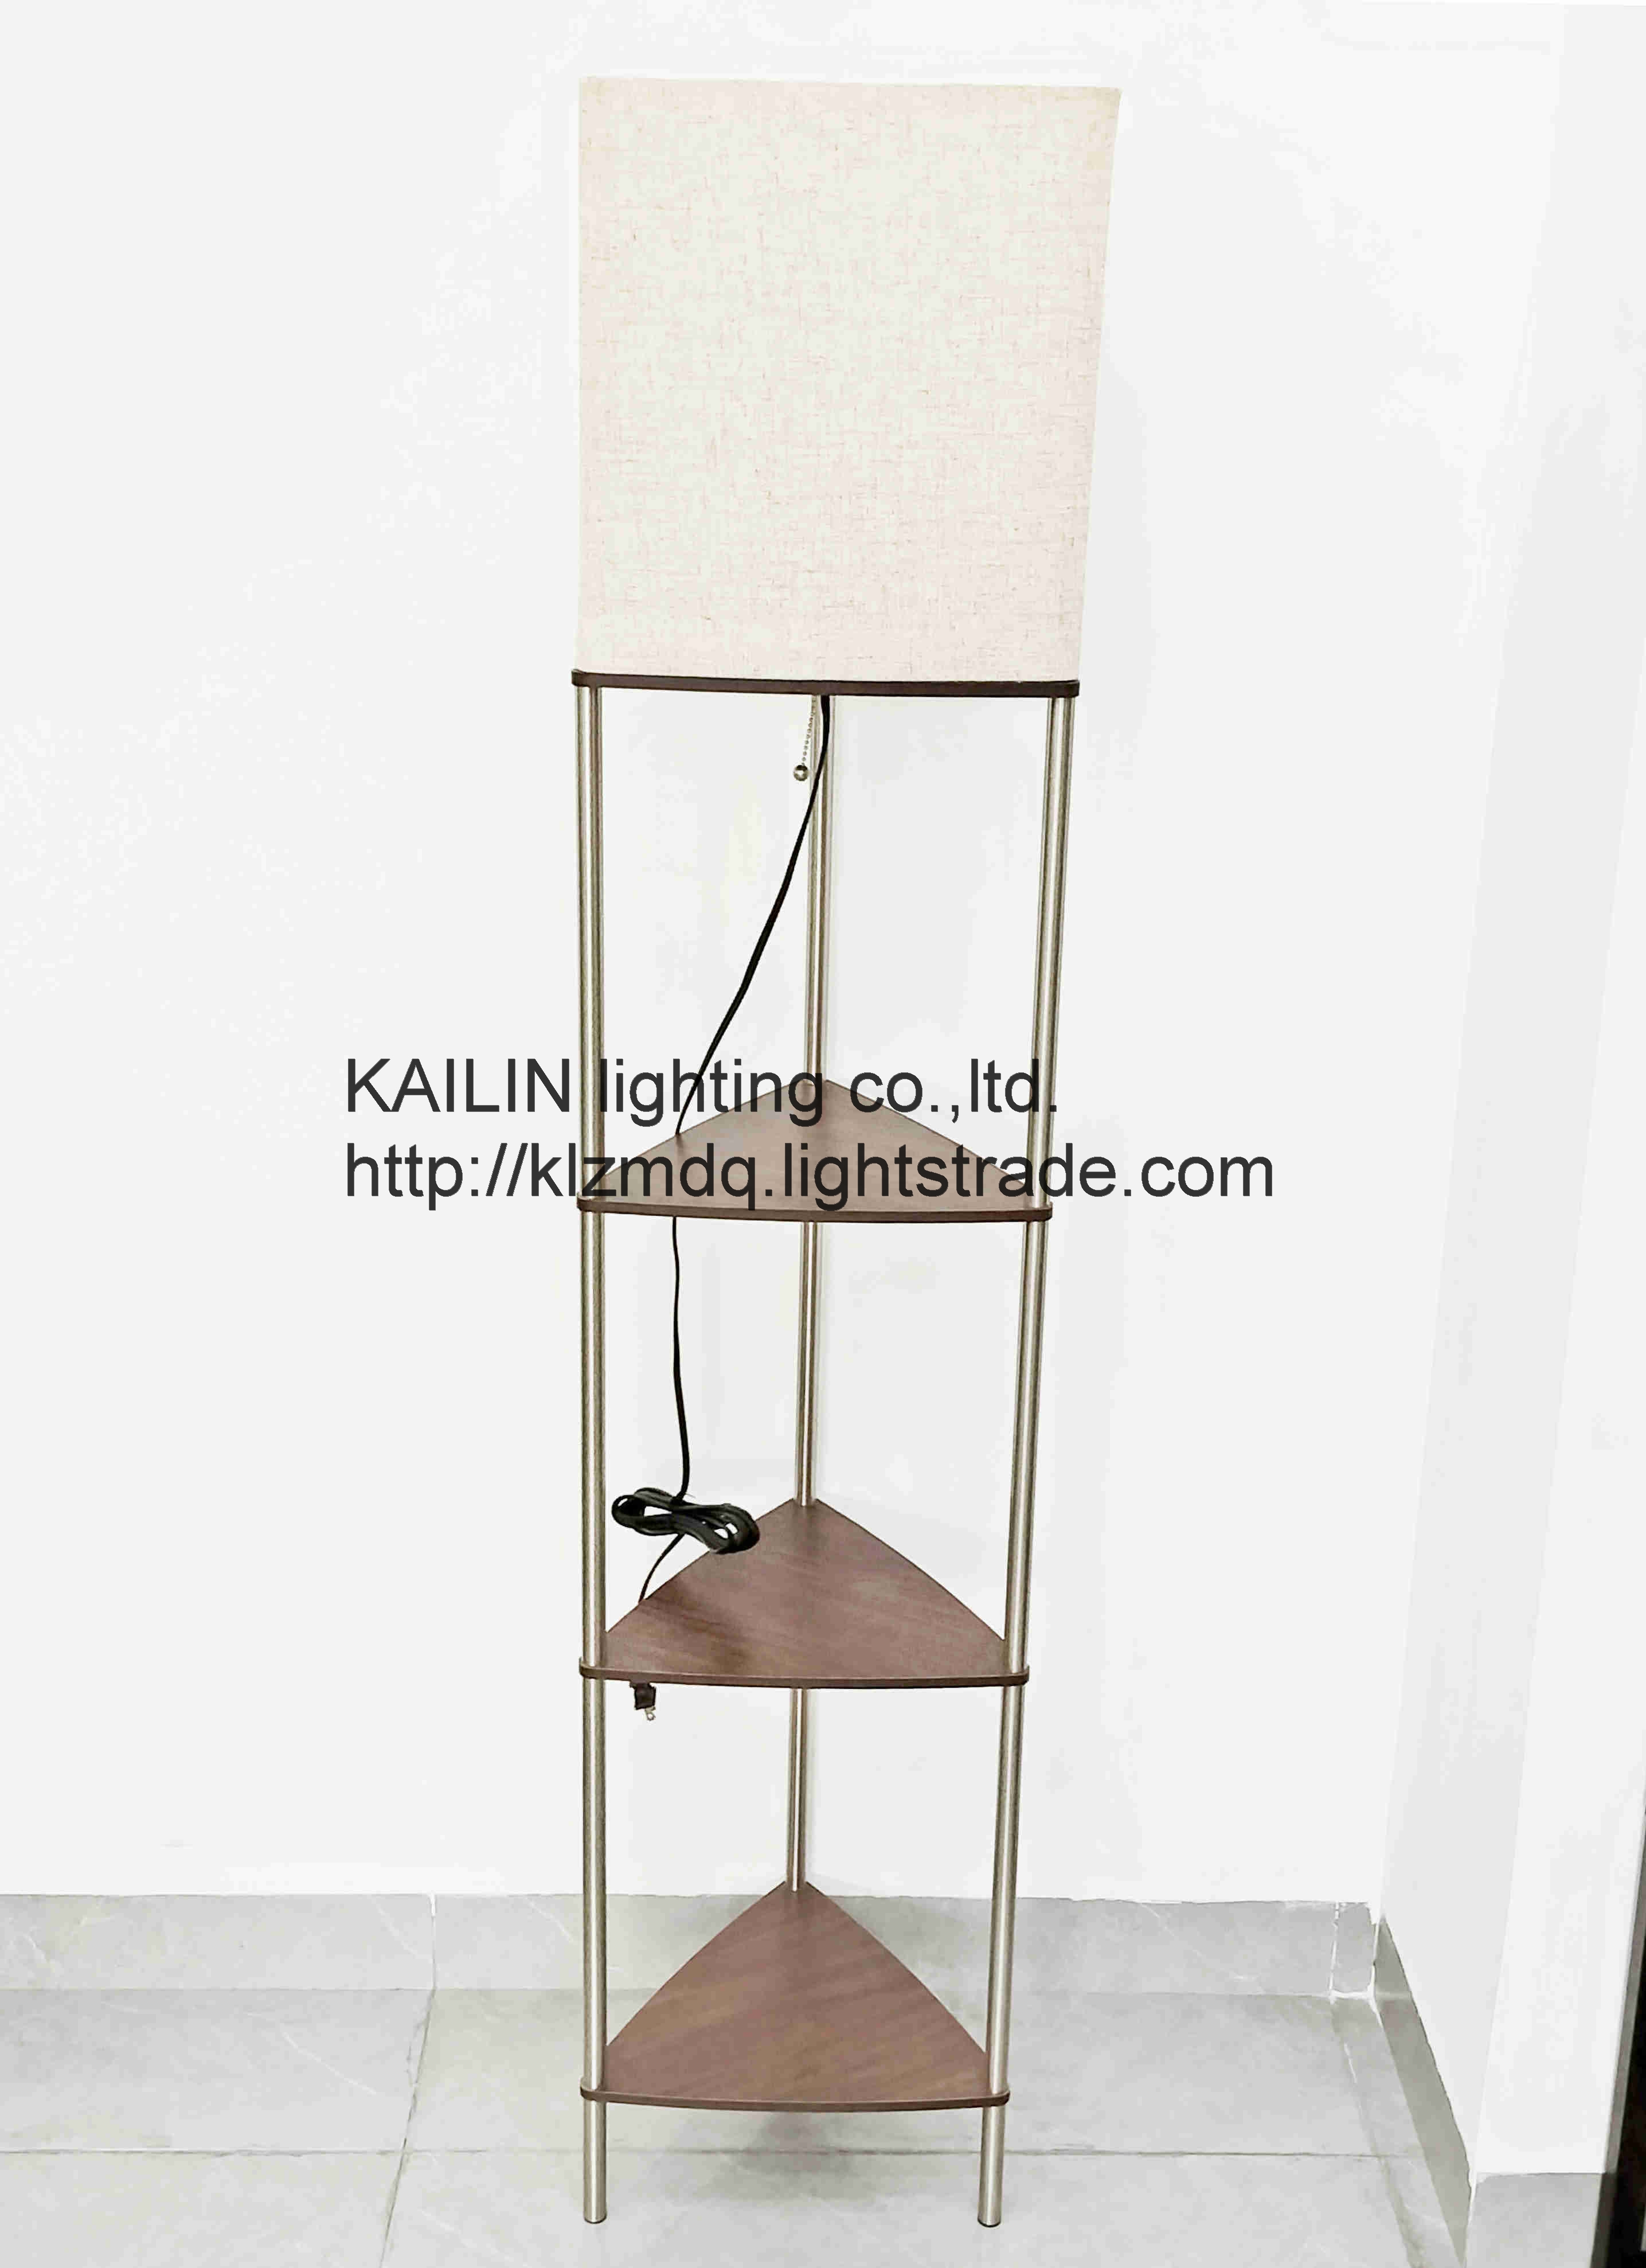 Tri-angle shelf floor lamp with fabric shade and led blub